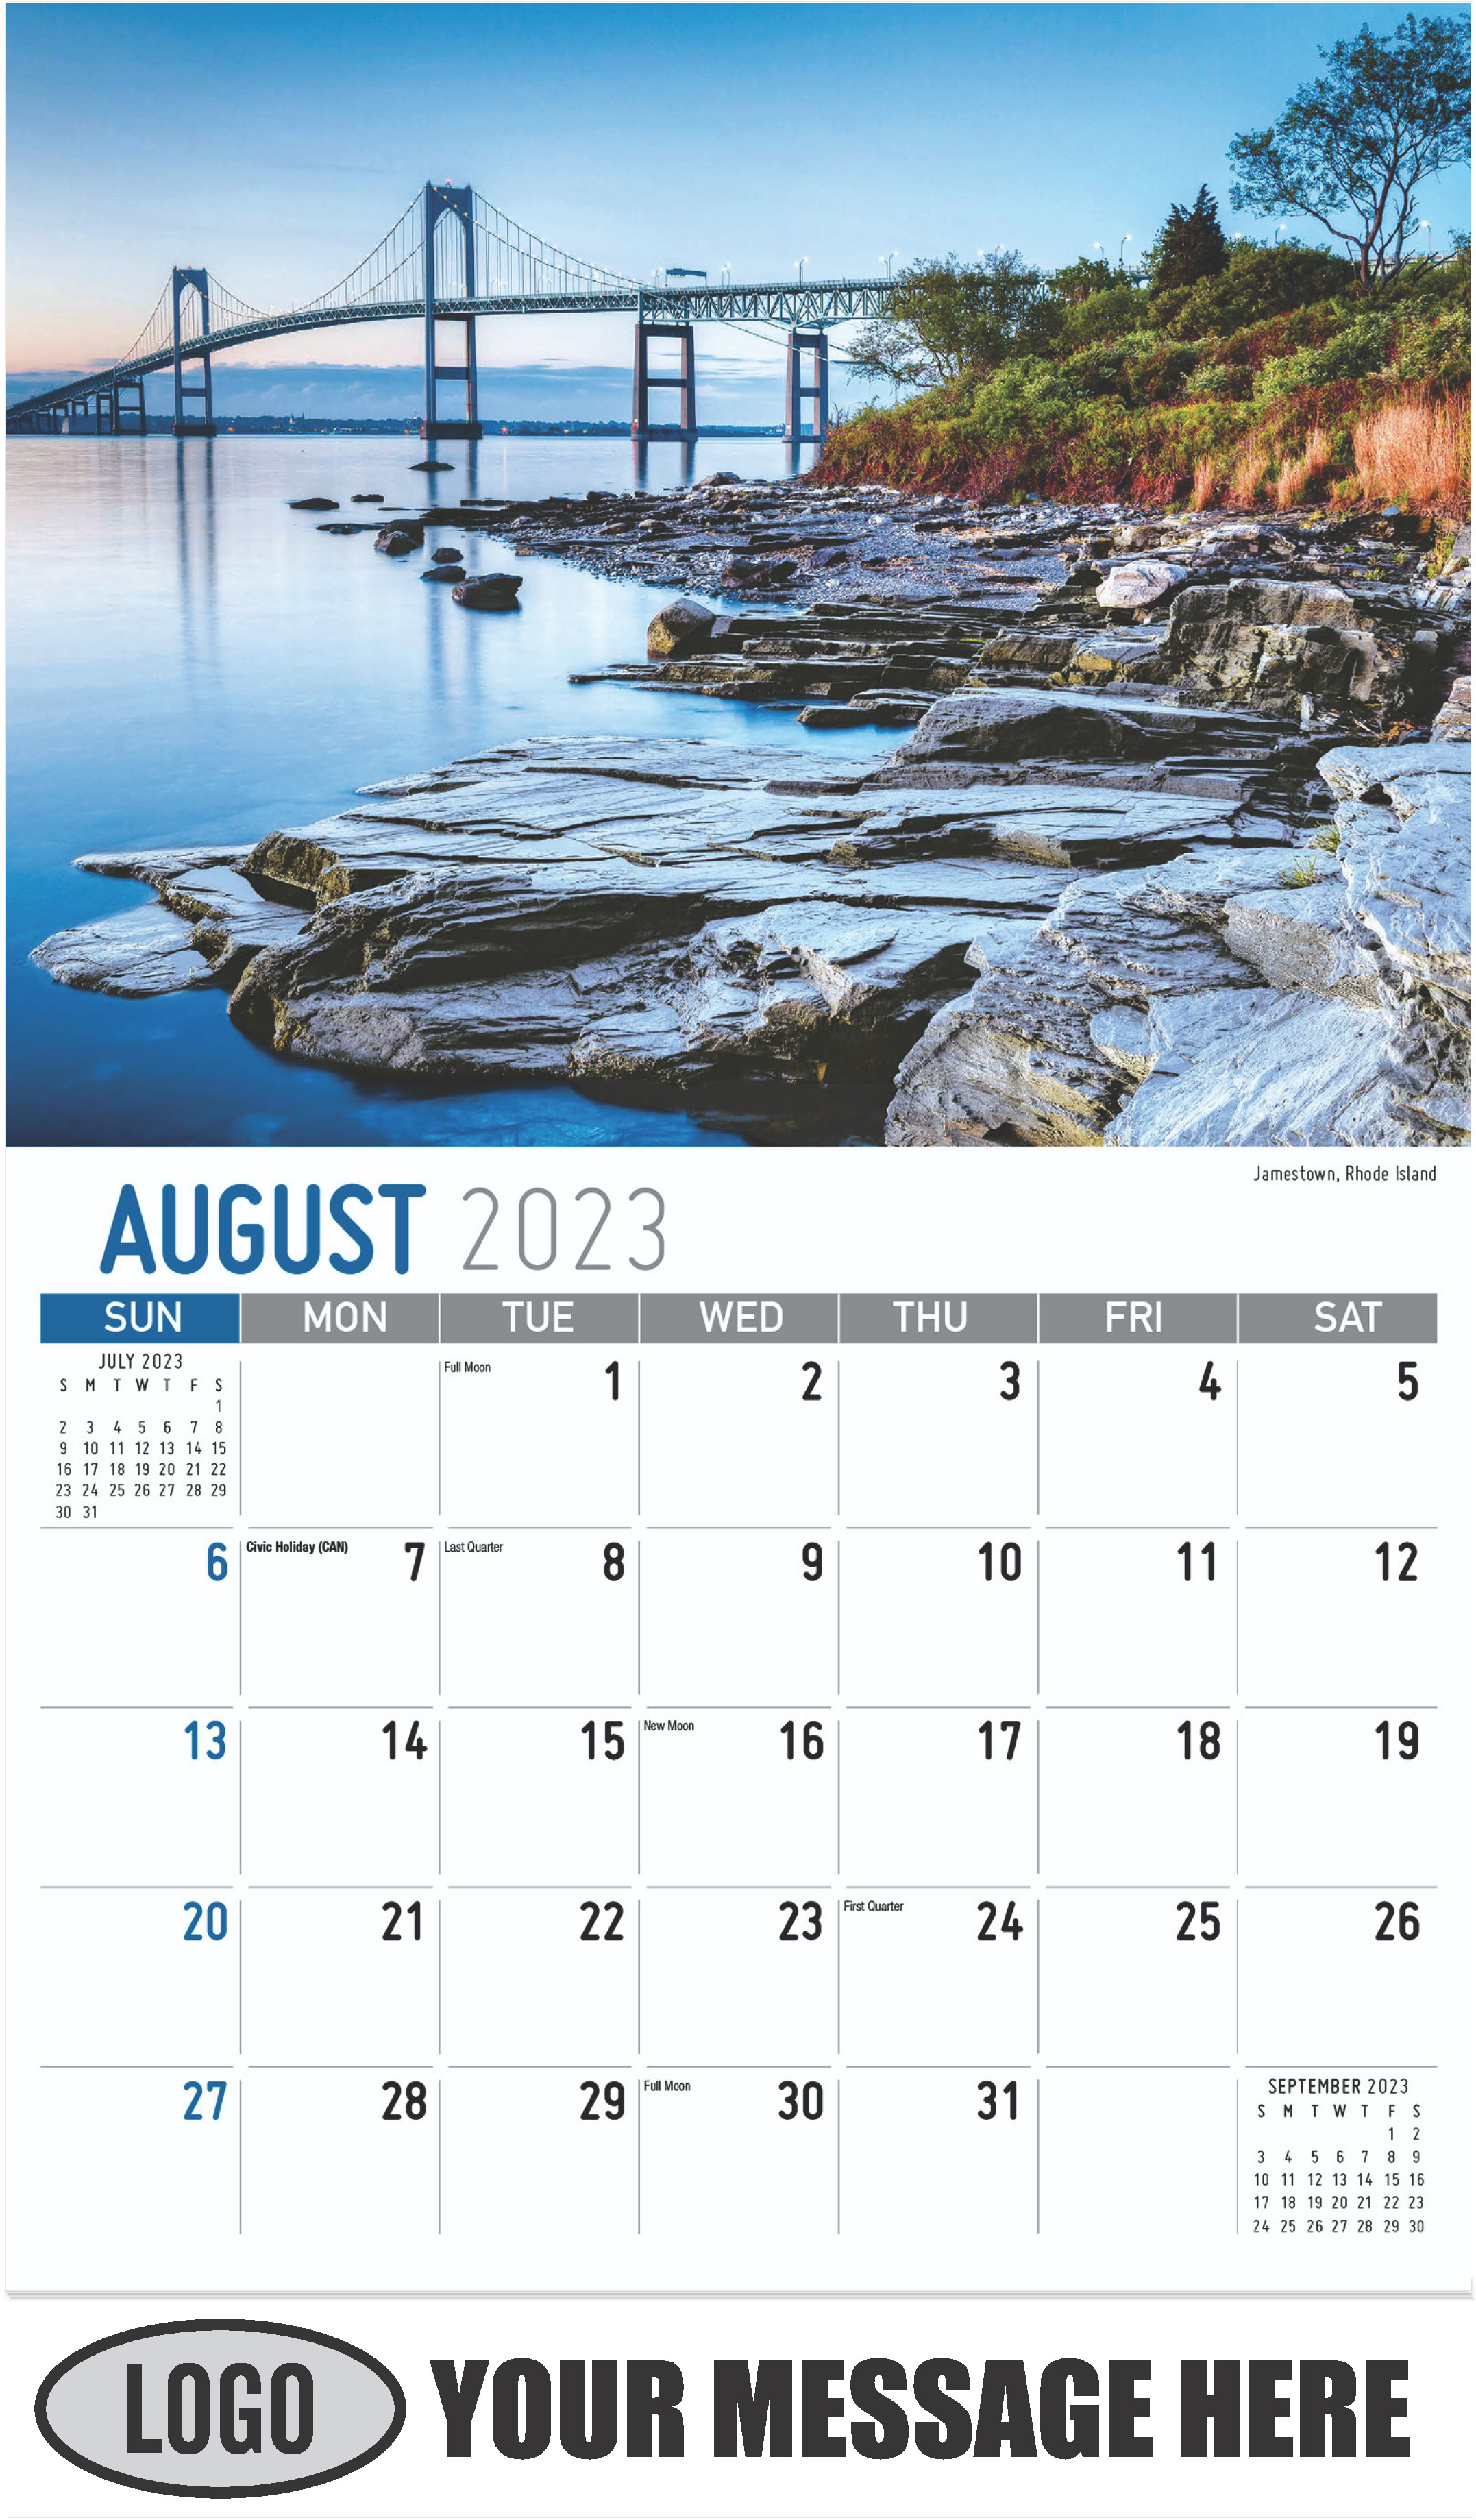 Jamestown, Rhode Island - August - Scenes of New England 2023 Promotional Calendar